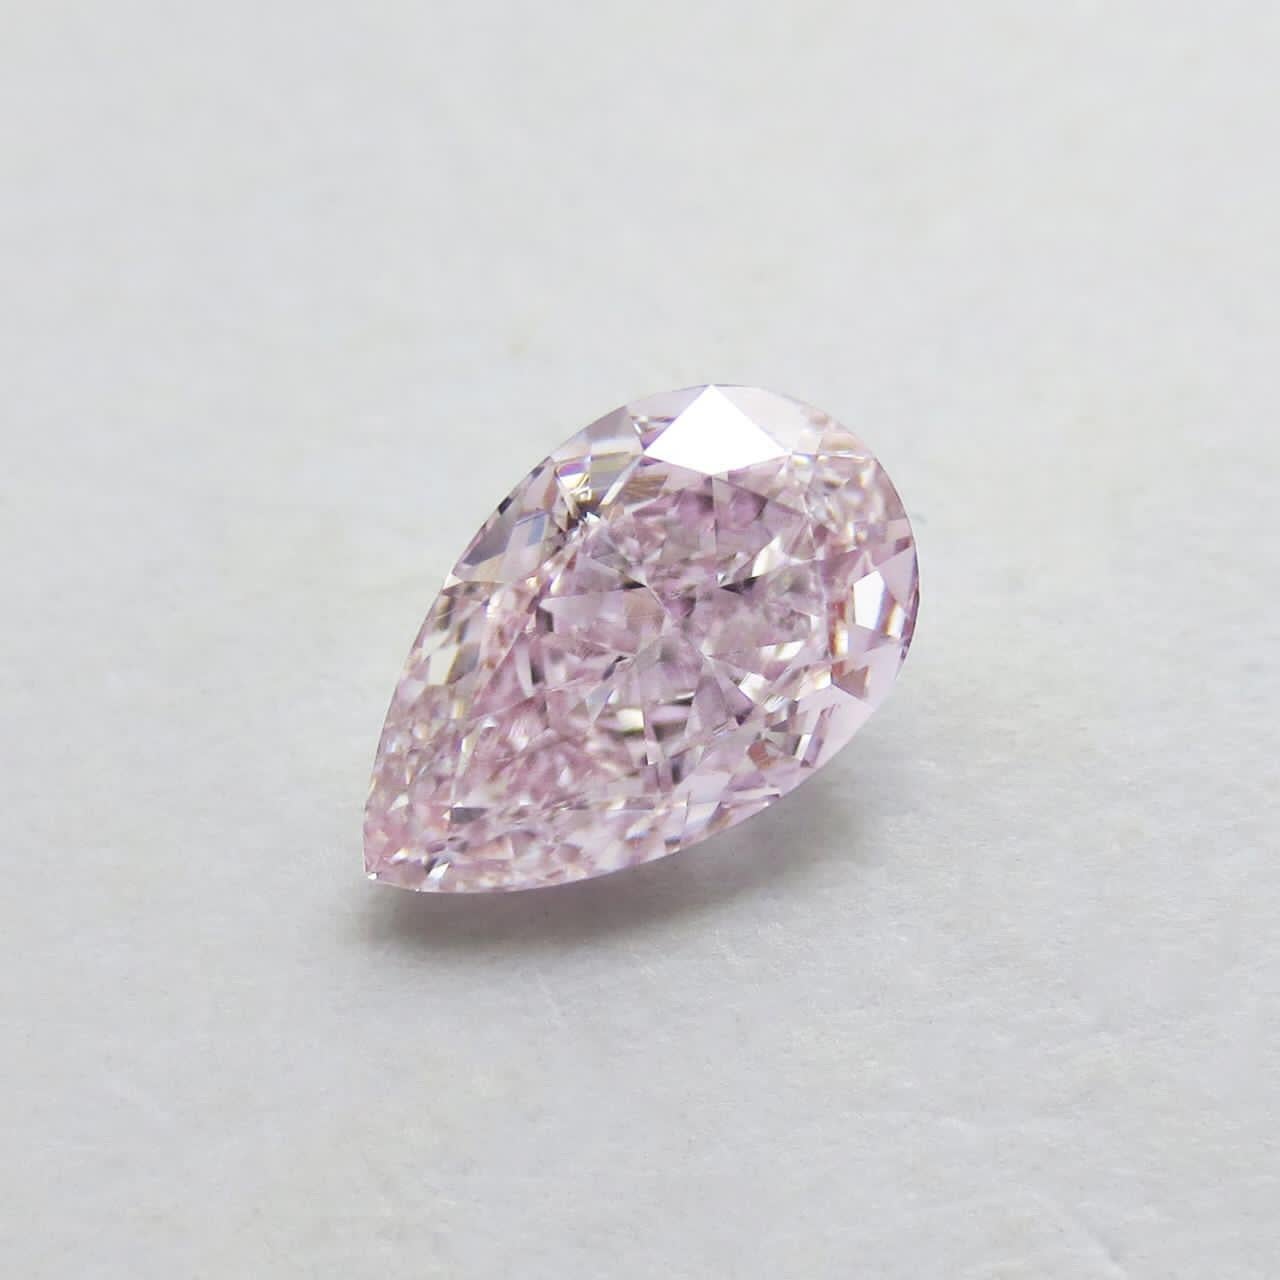 Pear Cut Emilio Jewelry GIA Certified 1.25 Carat Fancy Light Purplish Pink Diamond